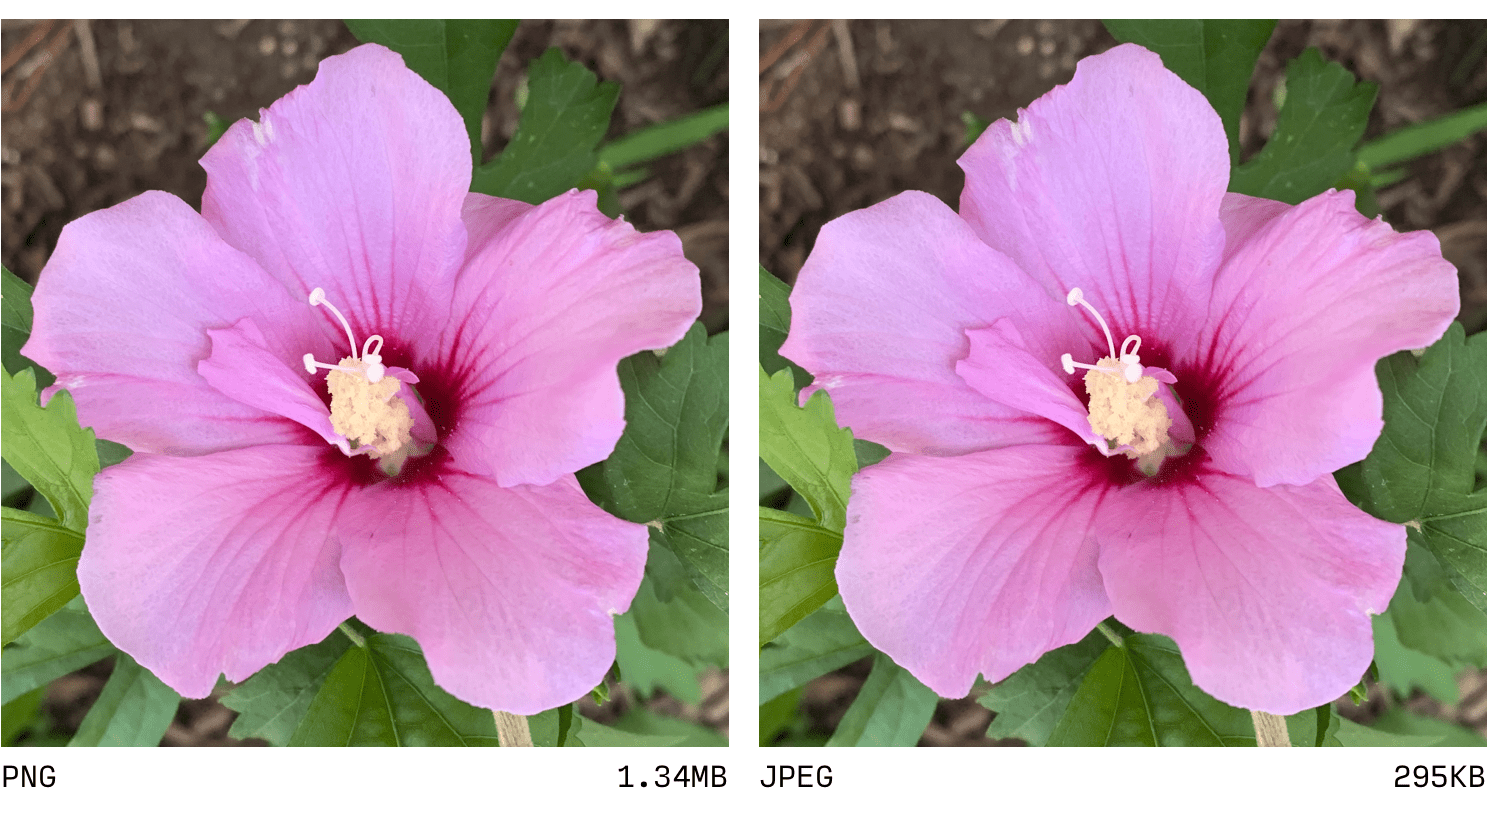 JPEG এবং PNG এর তুলনা।